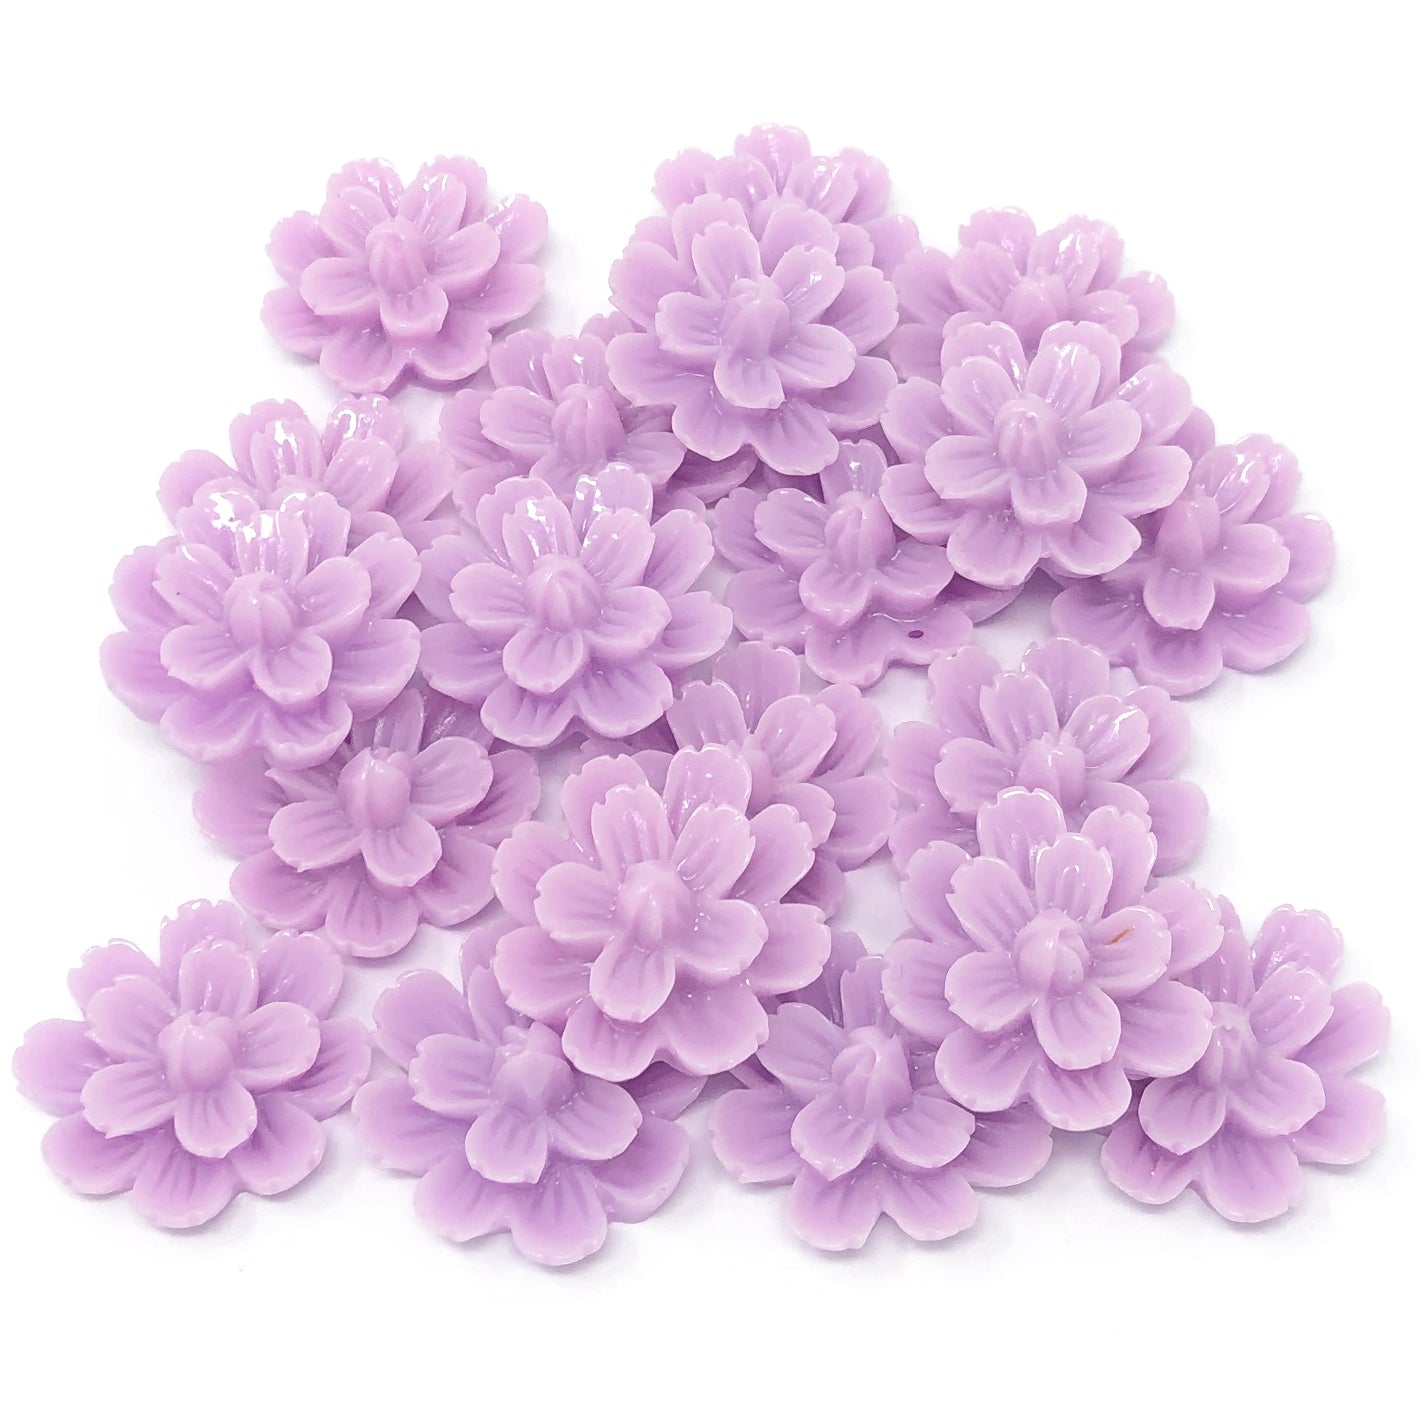 Lilac 20mm Resin Flower Flatbacks - Pack of 20